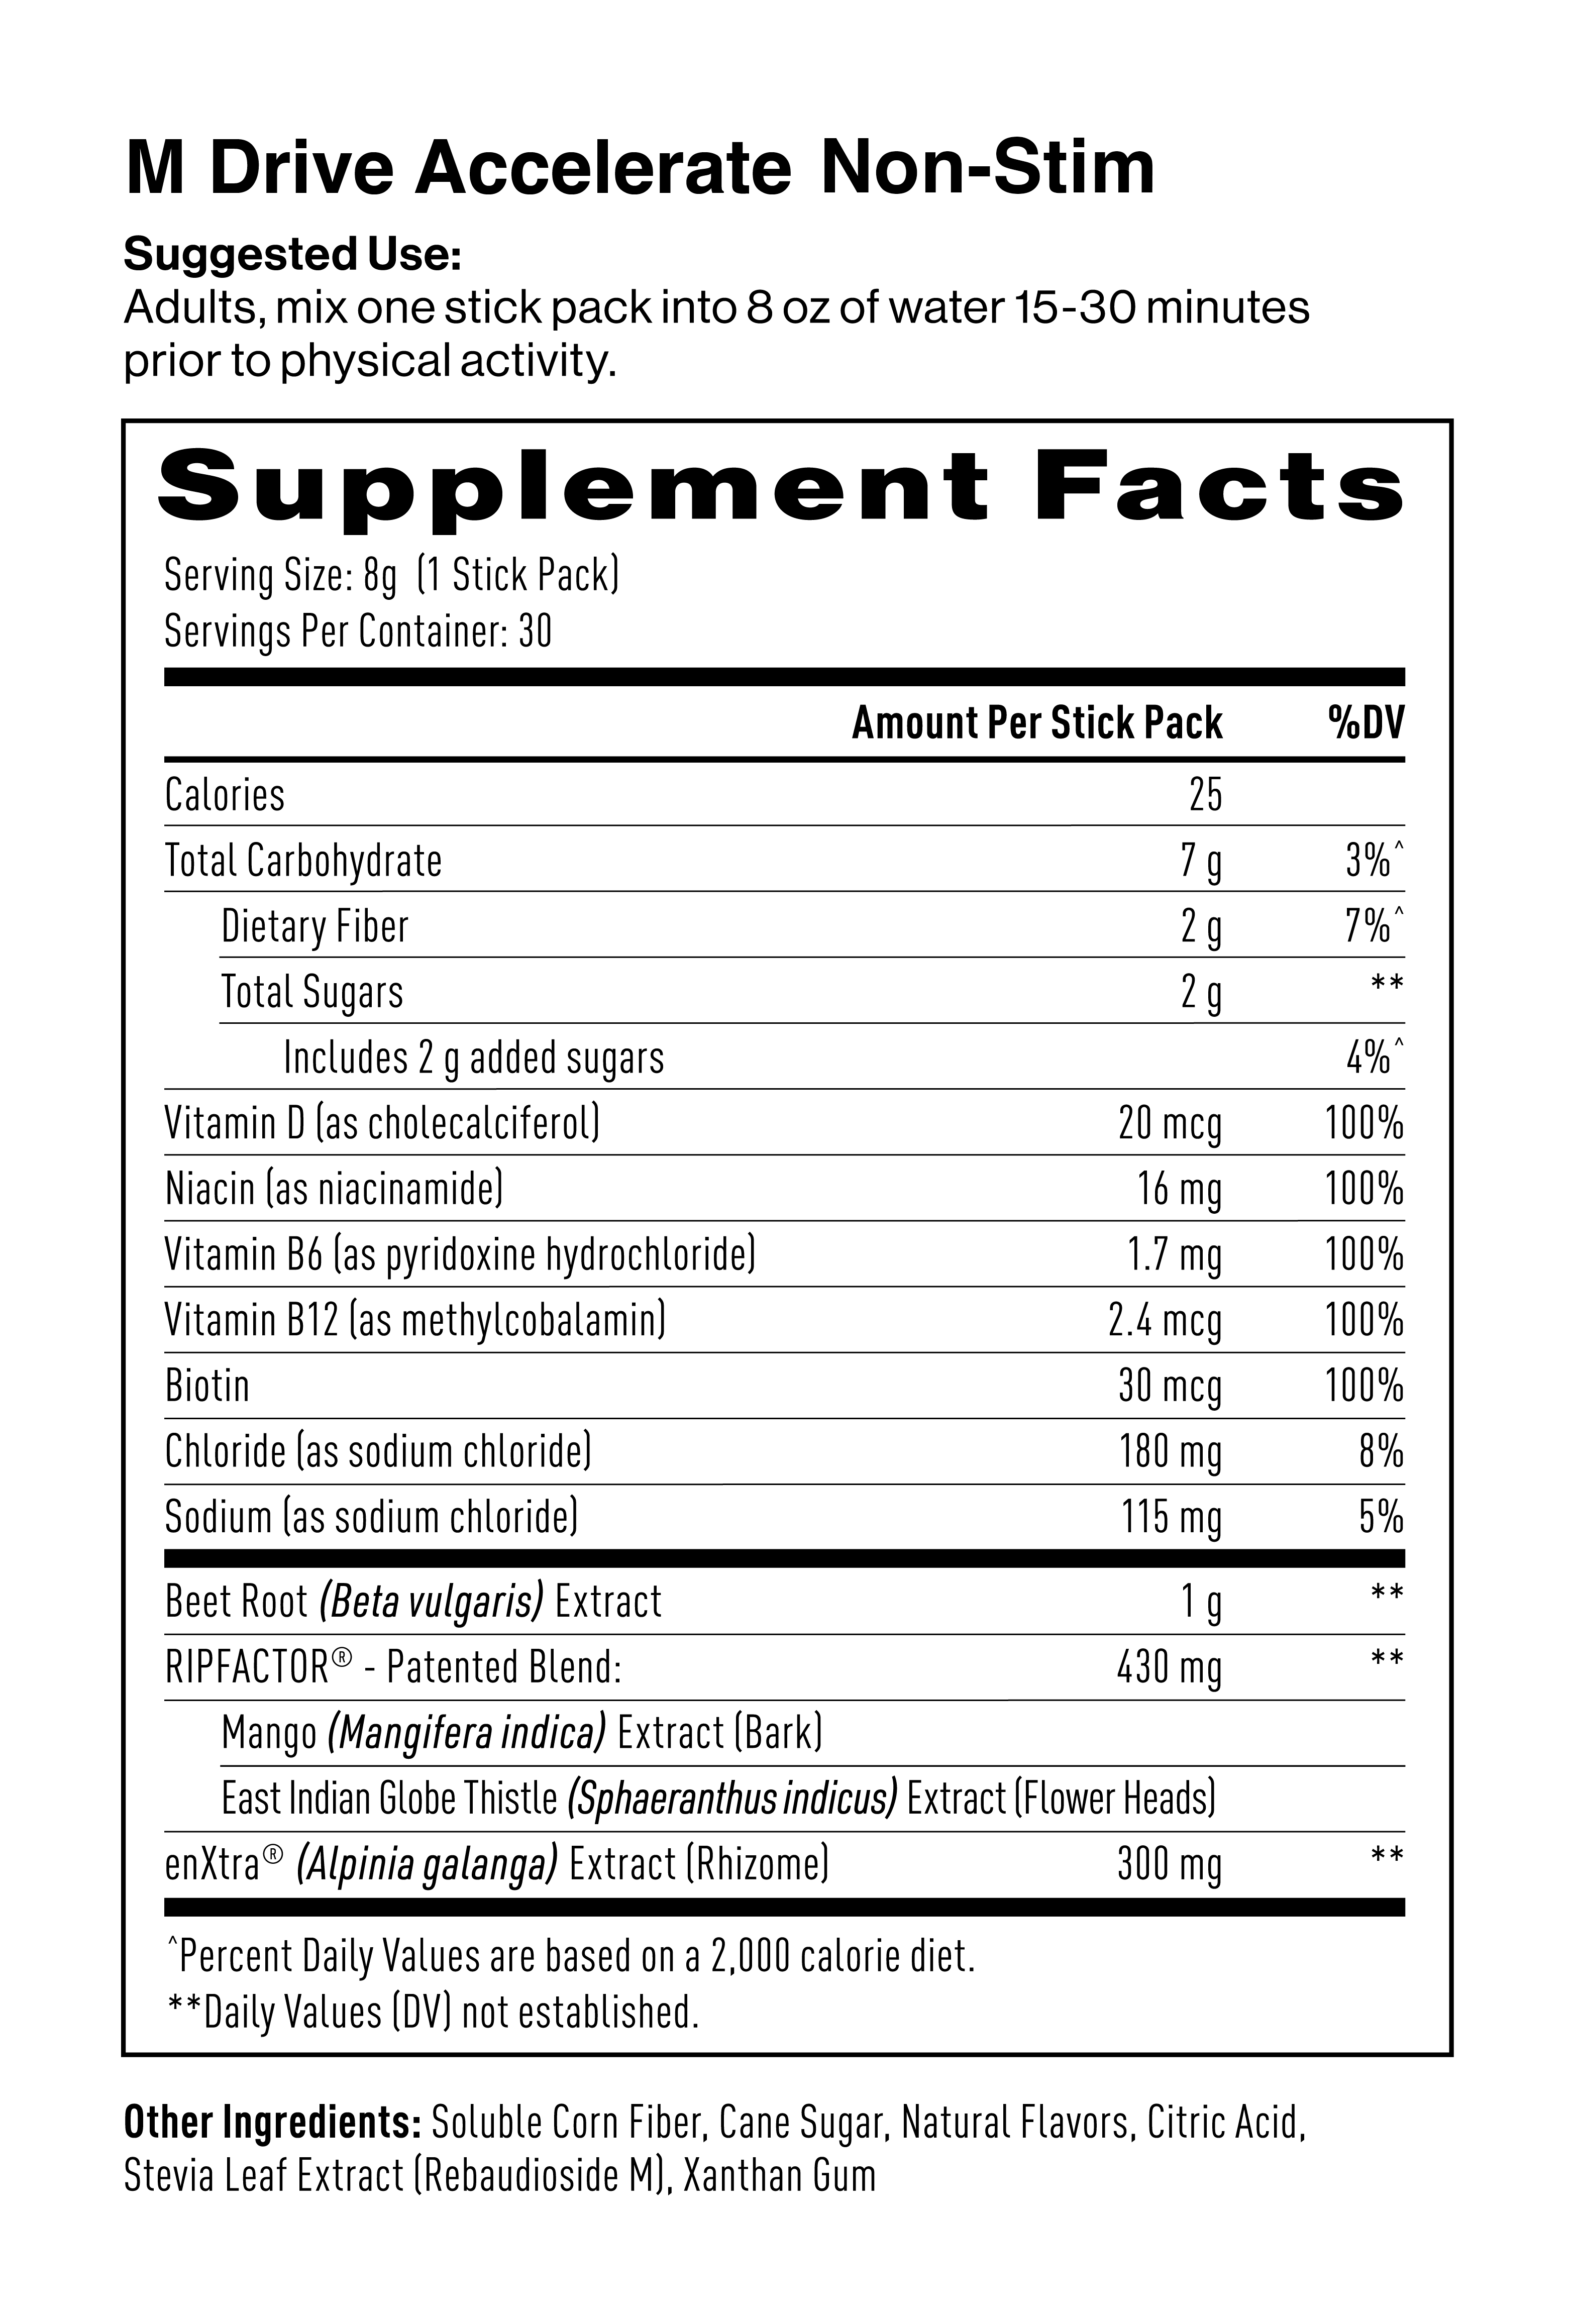 M Drive Accelerate Non-Stim Supplement Facts & Ingredients: Soluble Corn Fiber, Cane Sugar, Beet Root Extract, Natural Mixed Berry Flavor, RipFACTOR, Sodium Chloride, EnXtra, Citric Acid, Reb A (sweetener), Xanthan Gum Powder, Niacinamide, Vitamin B6, Biotin, Vitamin D3, Vitamin B12